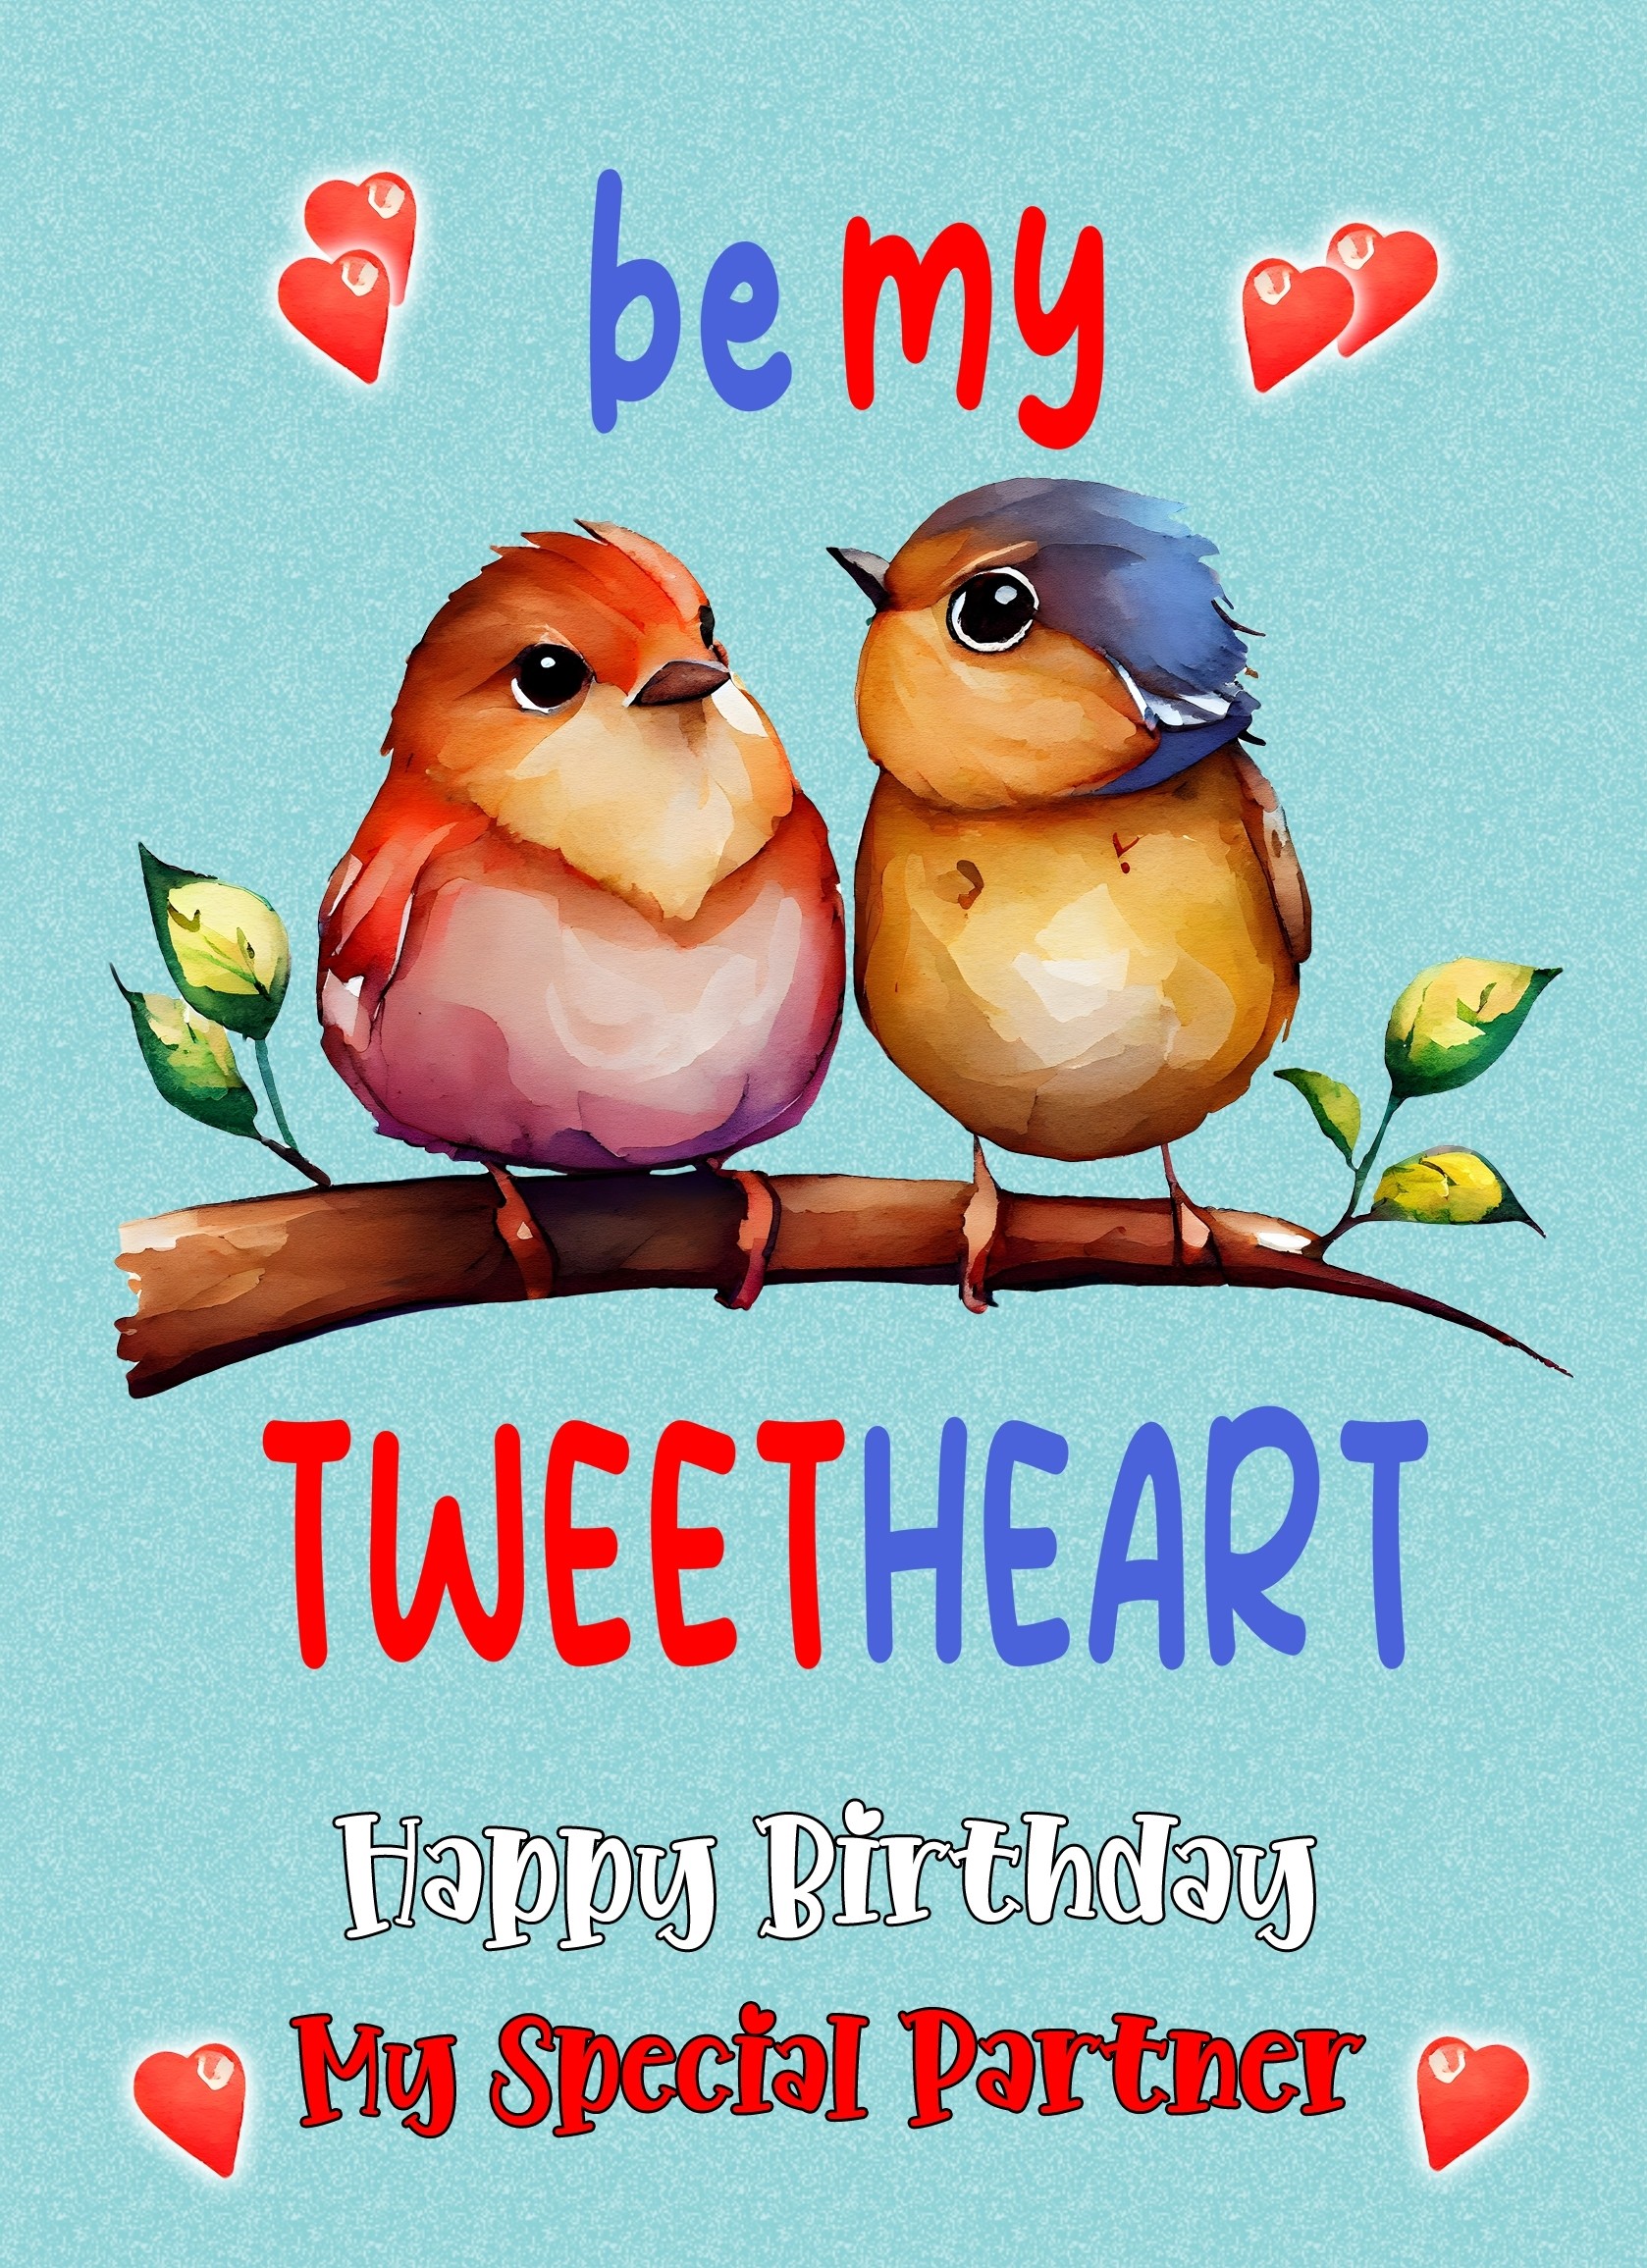 Funny Pun Romantic Birthday Card for Partner (Tweetheart)